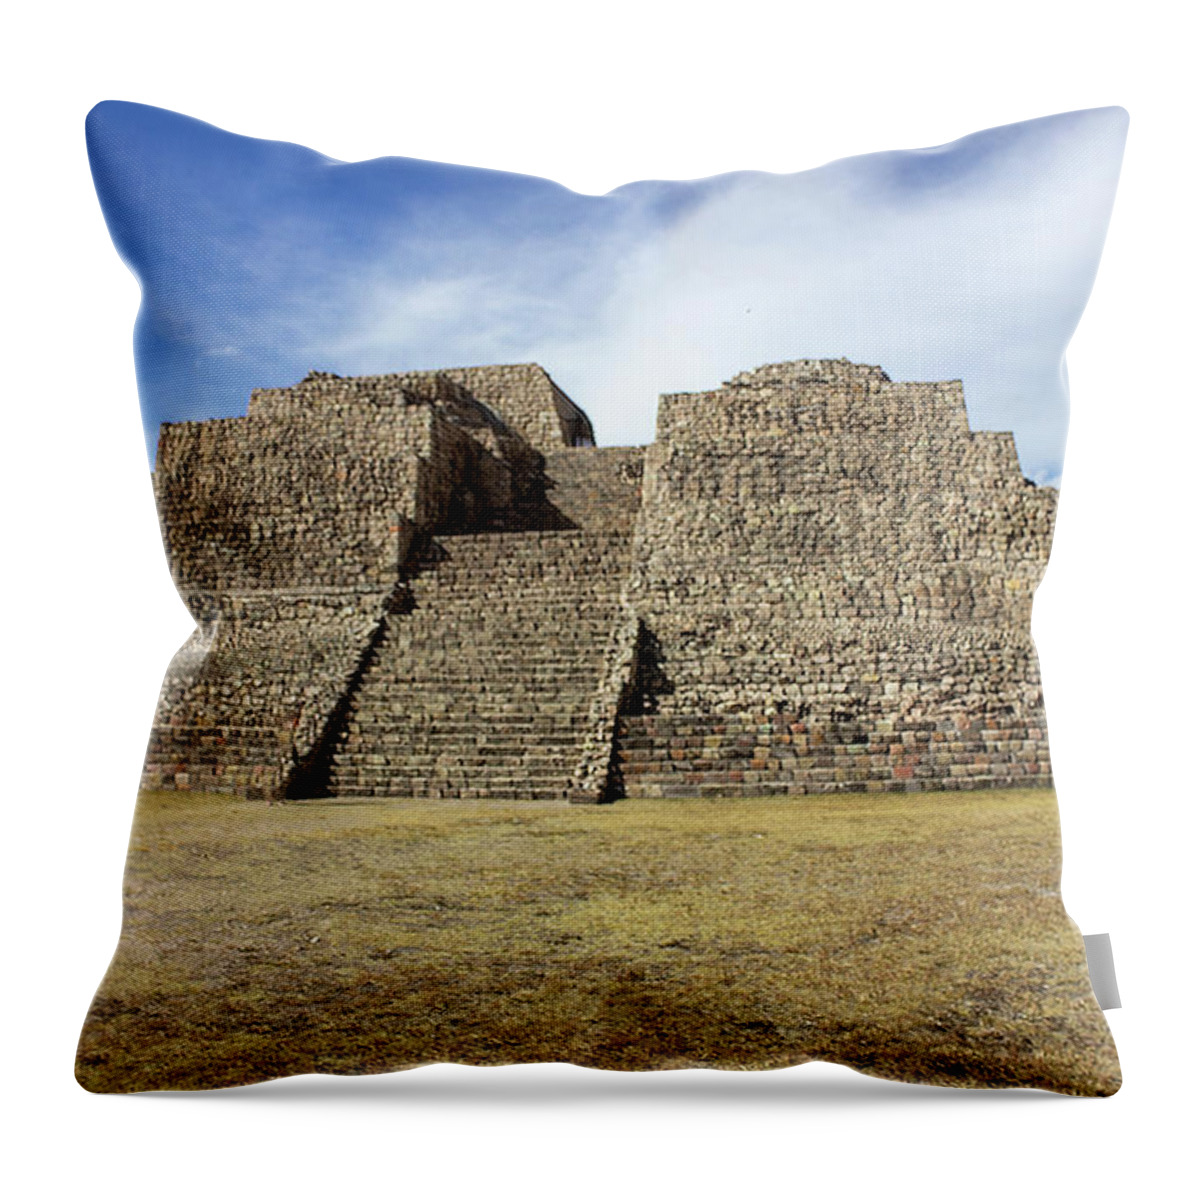 Mexico Pyramid Throw Pillow featuring the photograph Canada de la Virgen Pyramid by Cathy Anderson